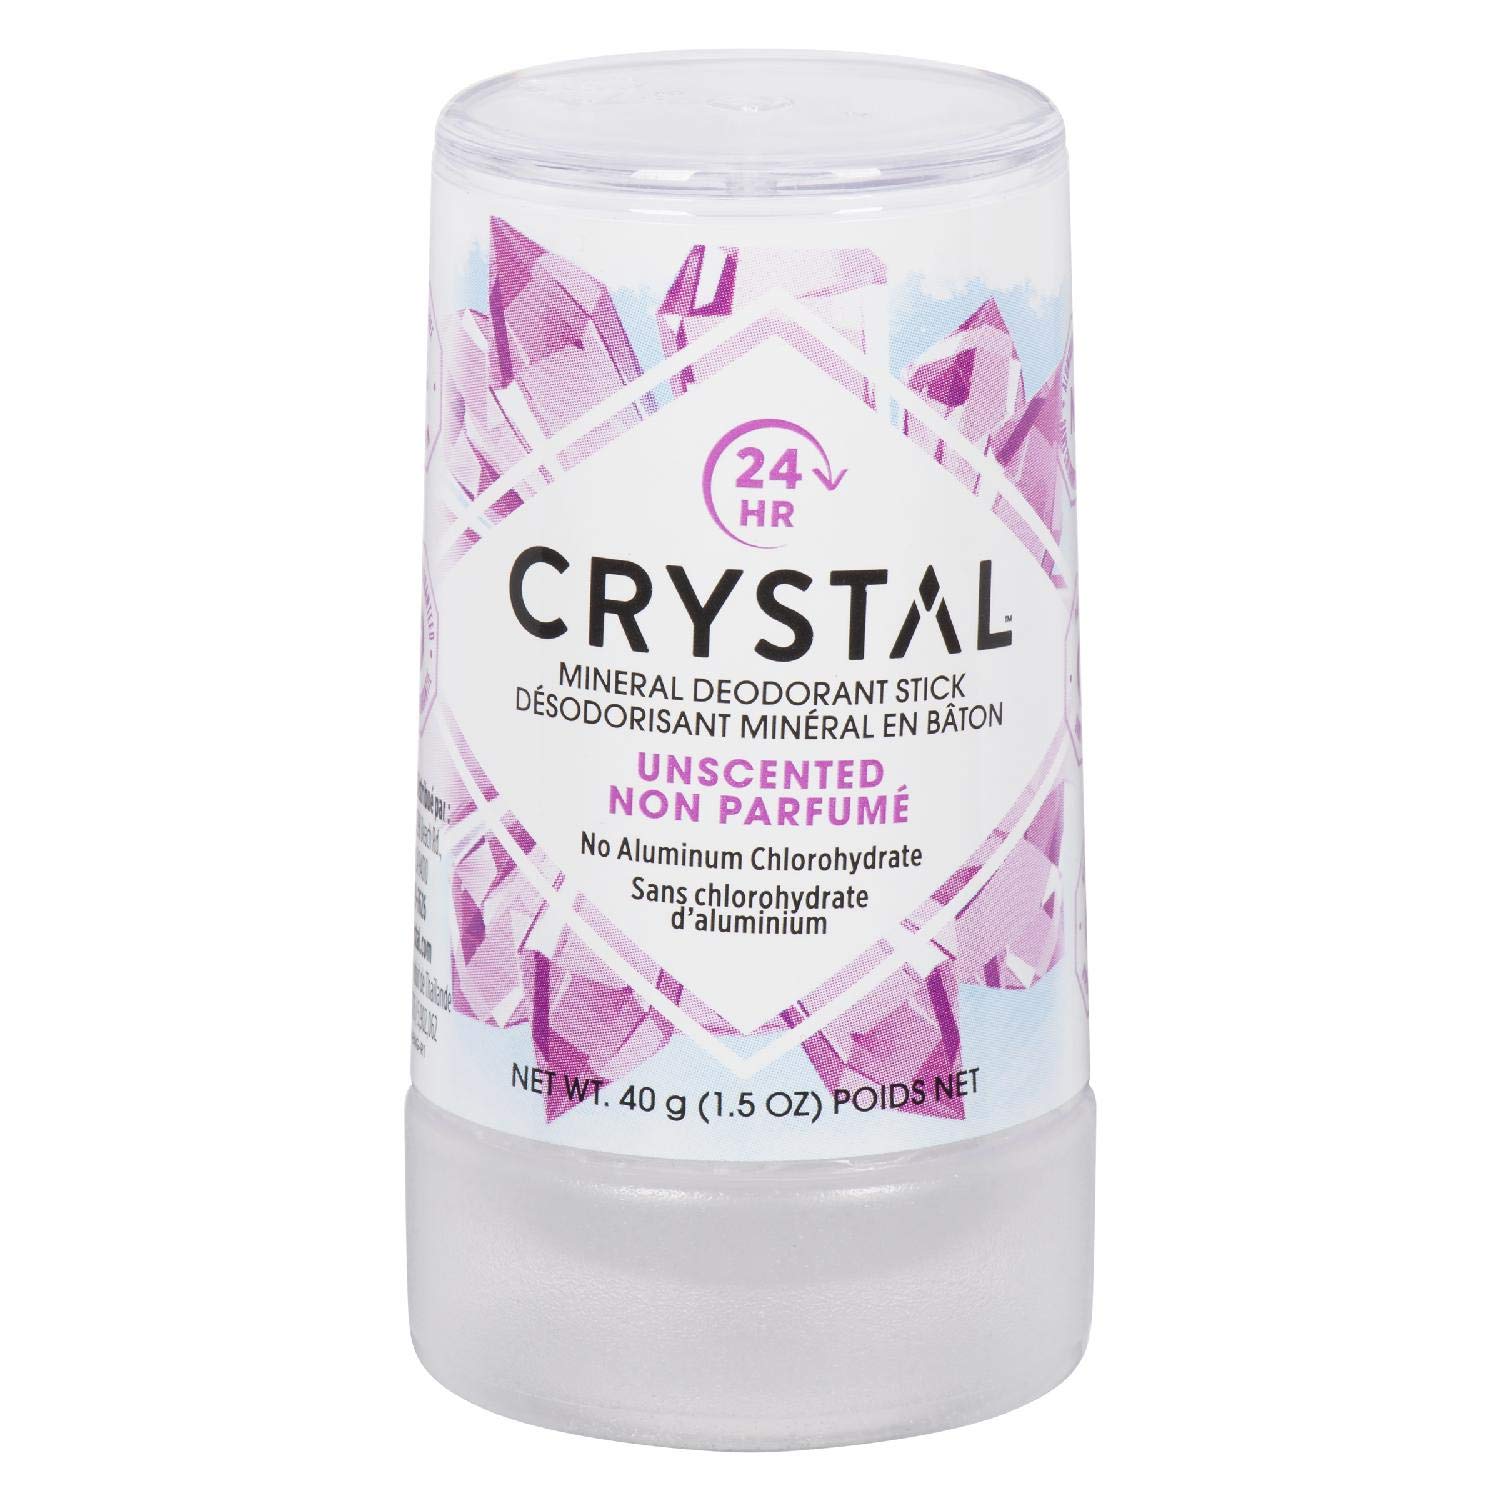 Дезодорант crystal. Crystal Mineral Deodorant Stick Unscented. Дезодорант Crystal Mineral Deodorant Stick. Дезодорант Crystal body Deodorant. Кристал дезодорант Кристалл.